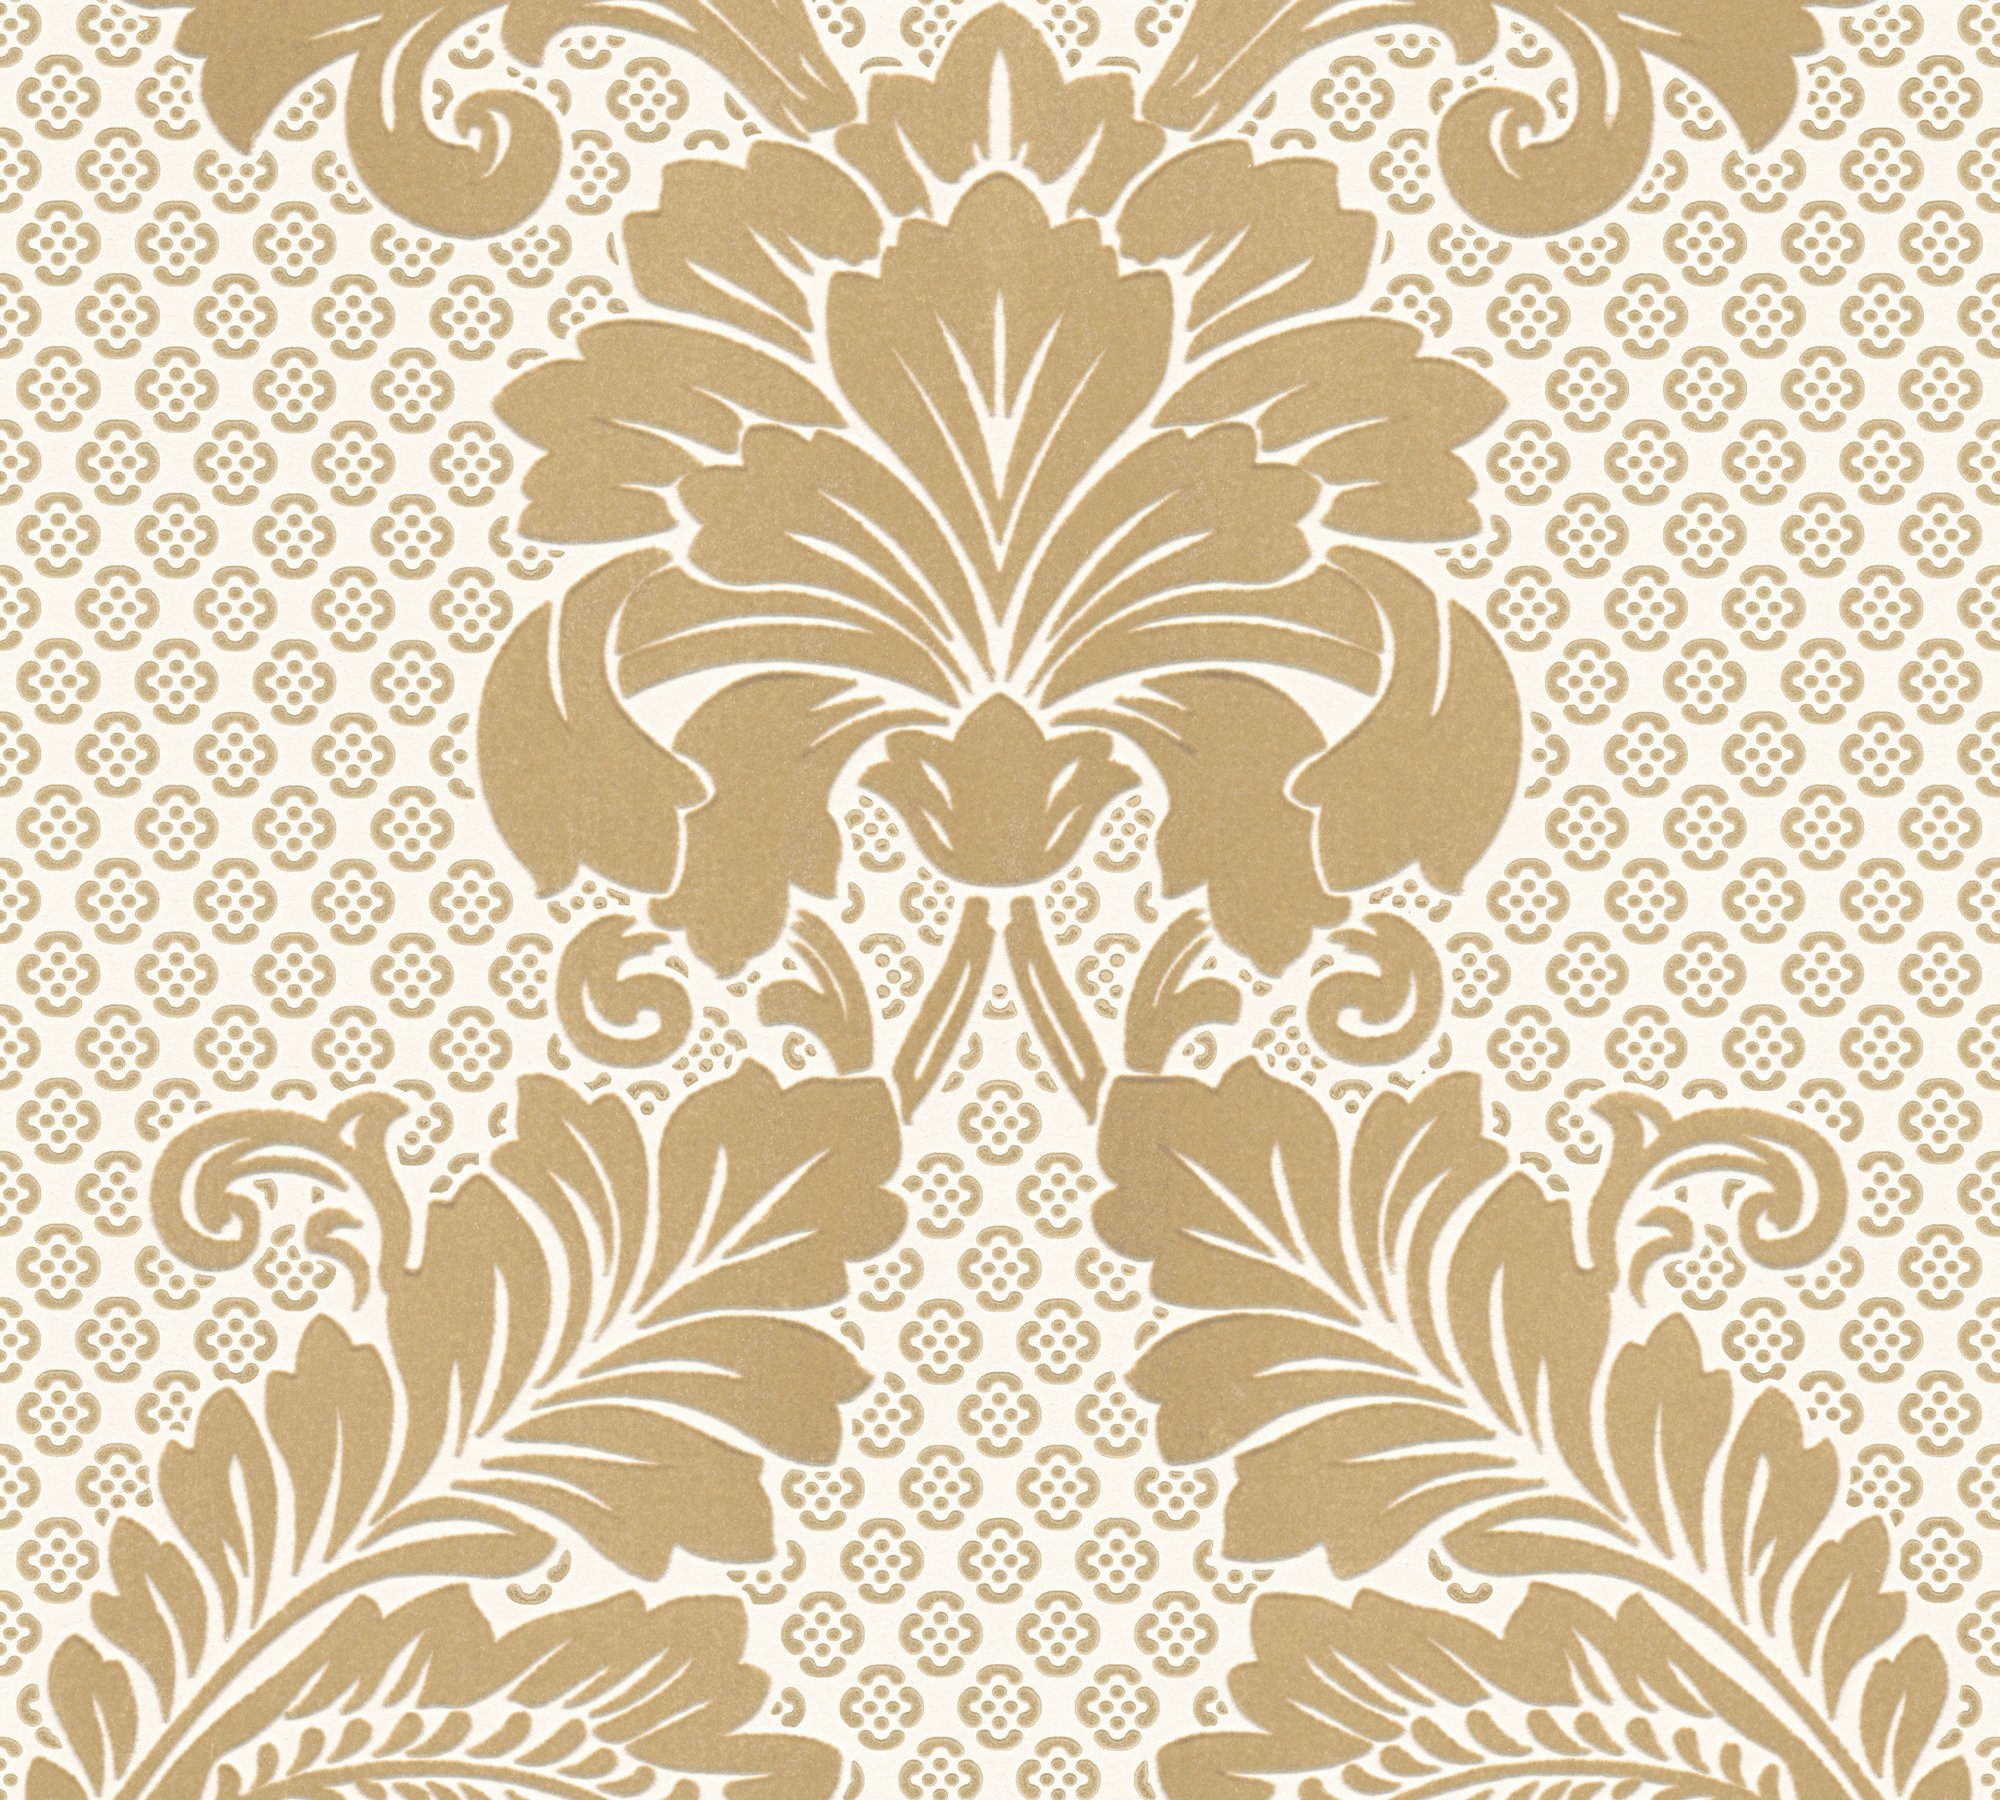 Barock gold/creme Création Tapete Luxury Vliestapete A.S. Architects wallpaper, Paper Ornament Barock, beflockt,